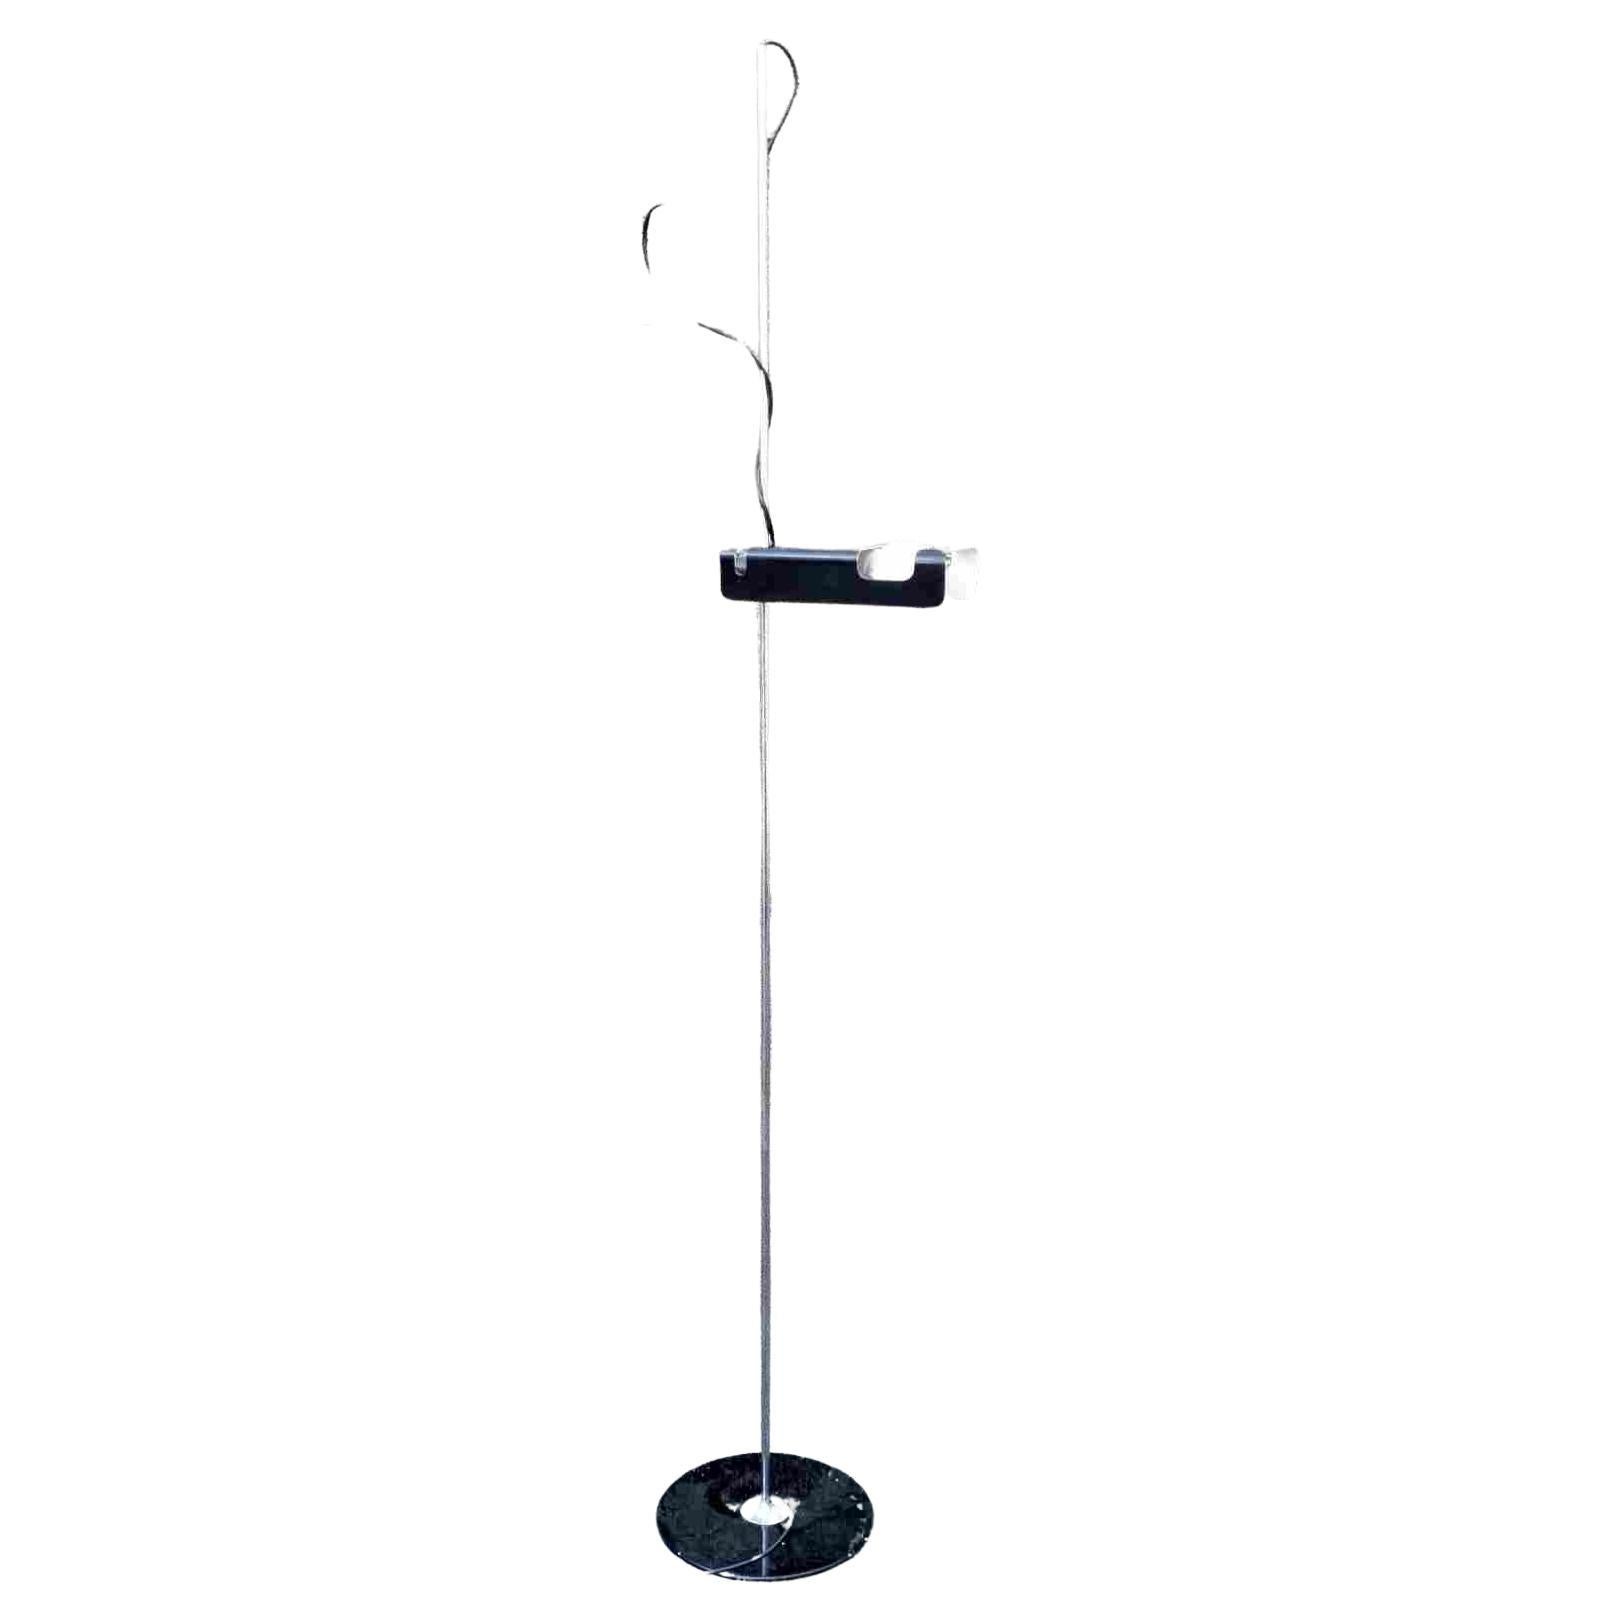 Midcentury Floor Lamp Model Spider by Joe Colombo for Oluce, Italy, 1967 For Sale